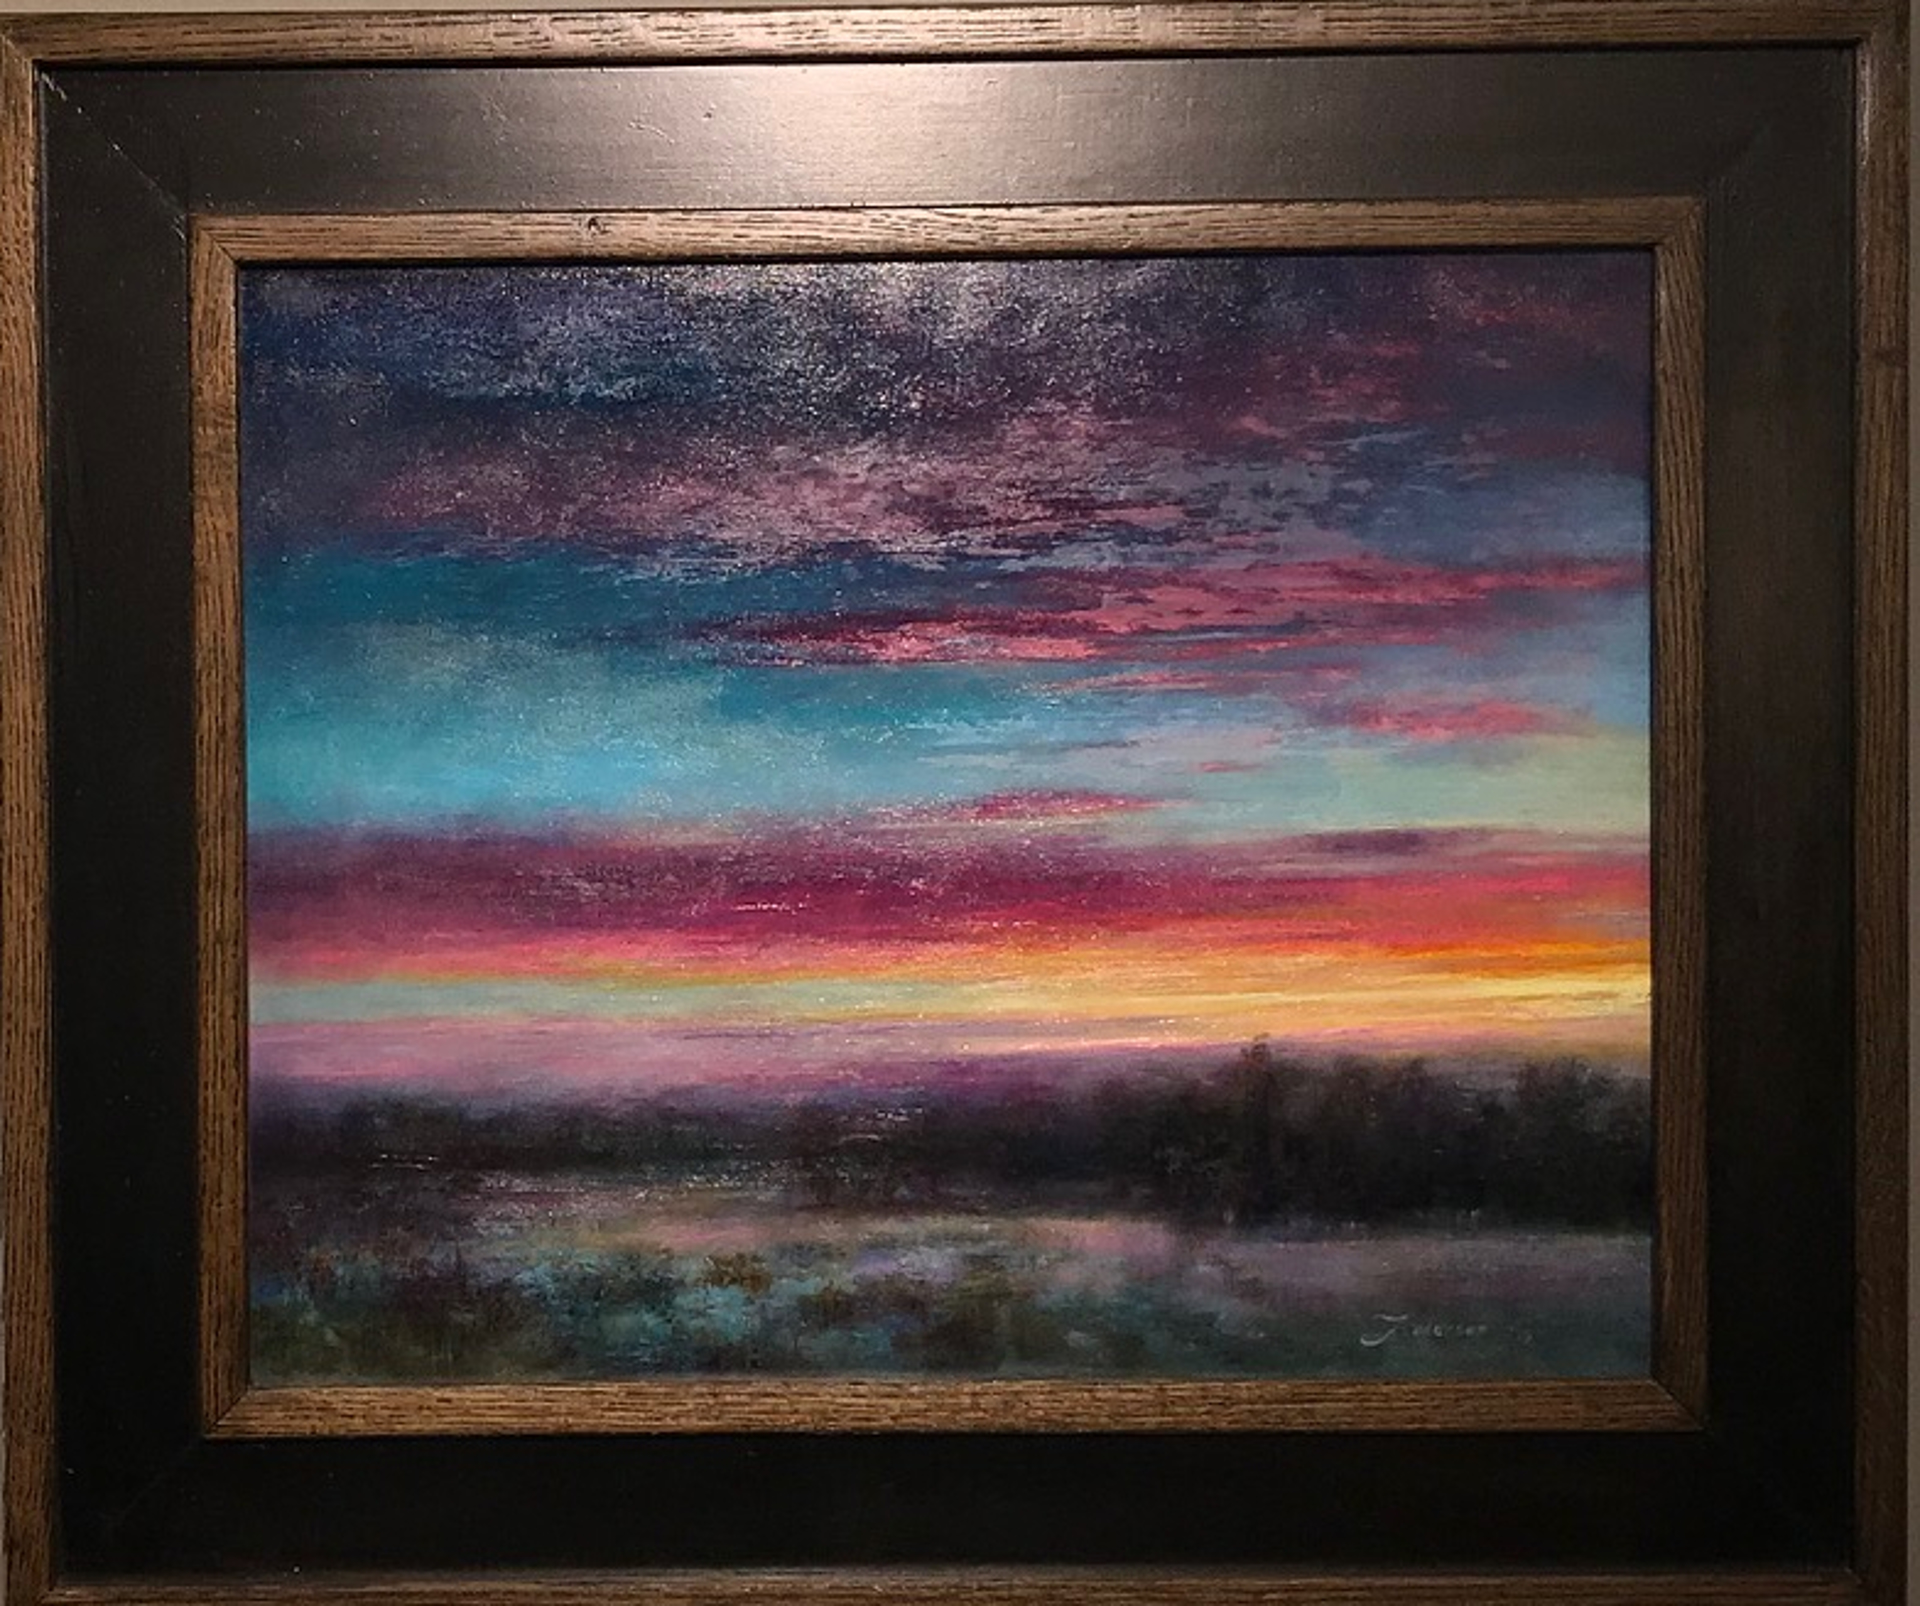 Winter Sunset by John Andersen